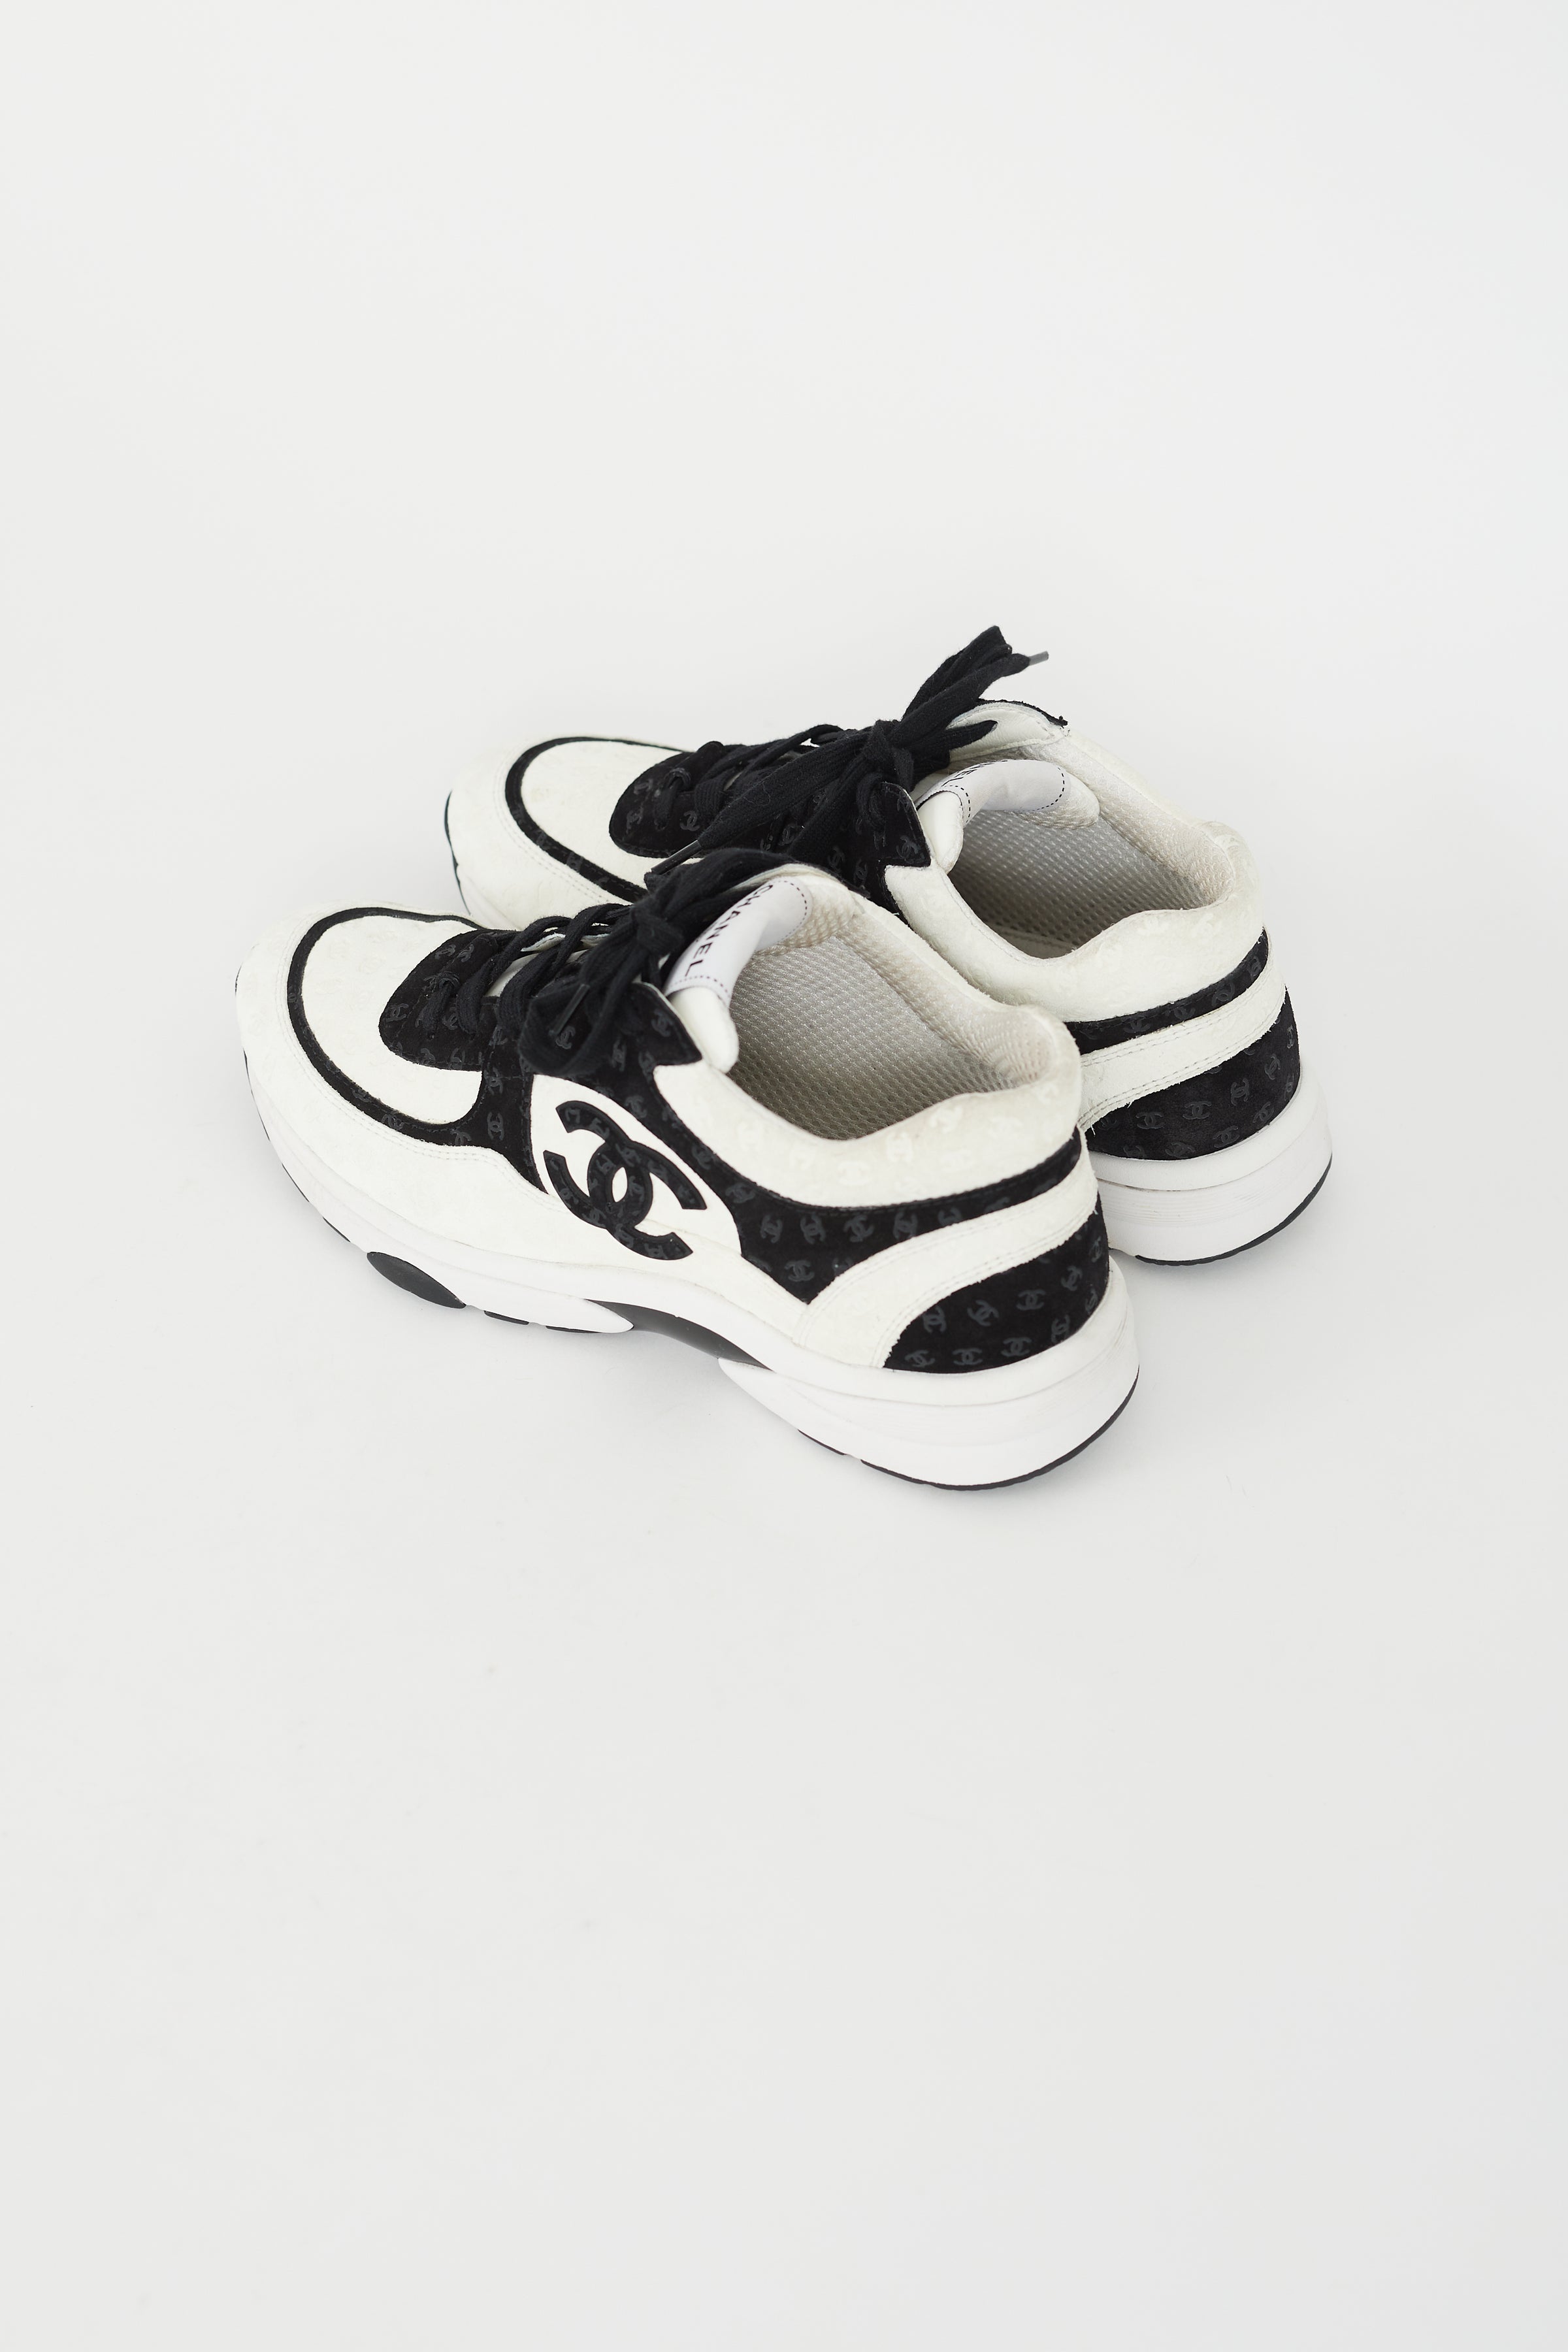 chanel white black sneakers